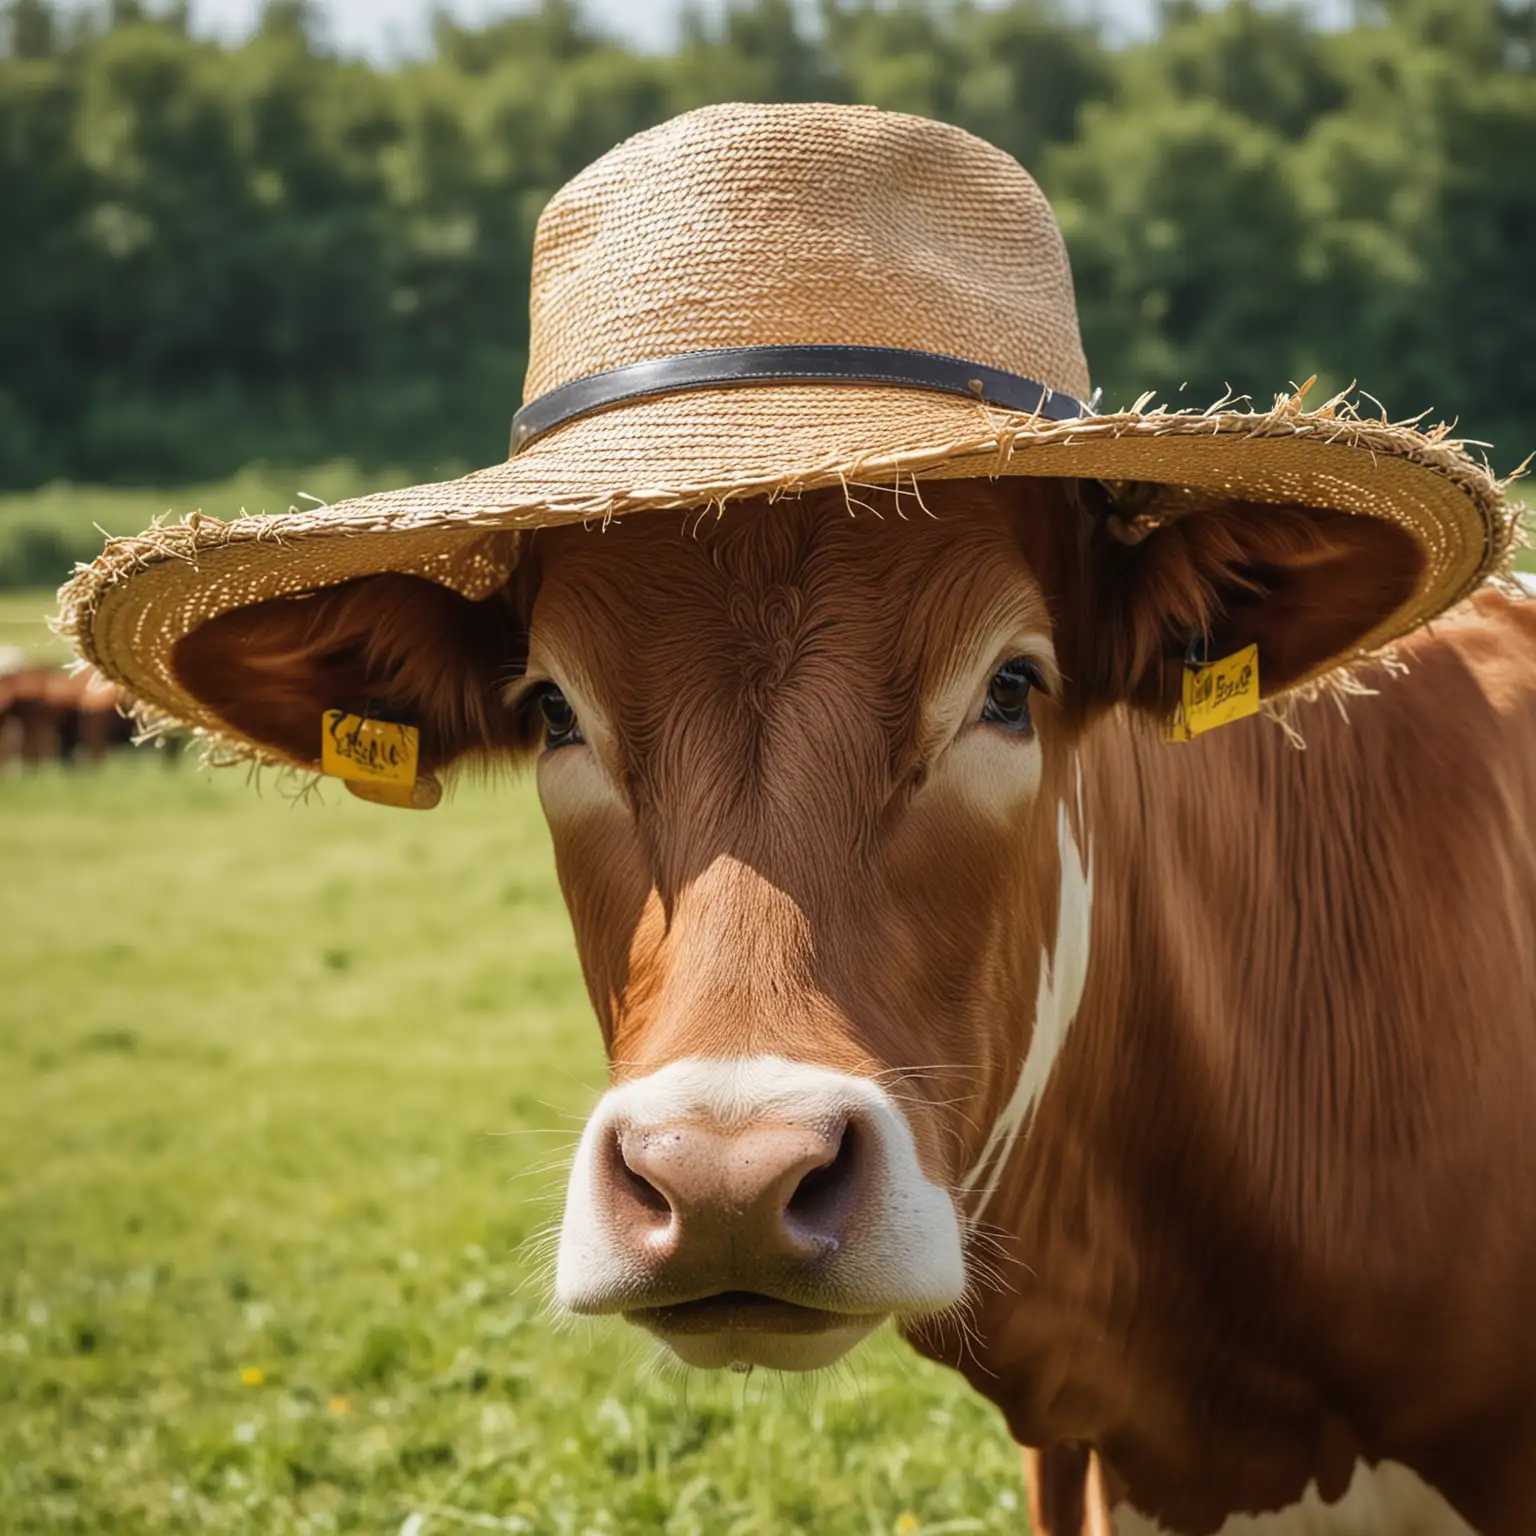 Summer Portrait Cow Wearing a Straw Hat in a Sunny Field